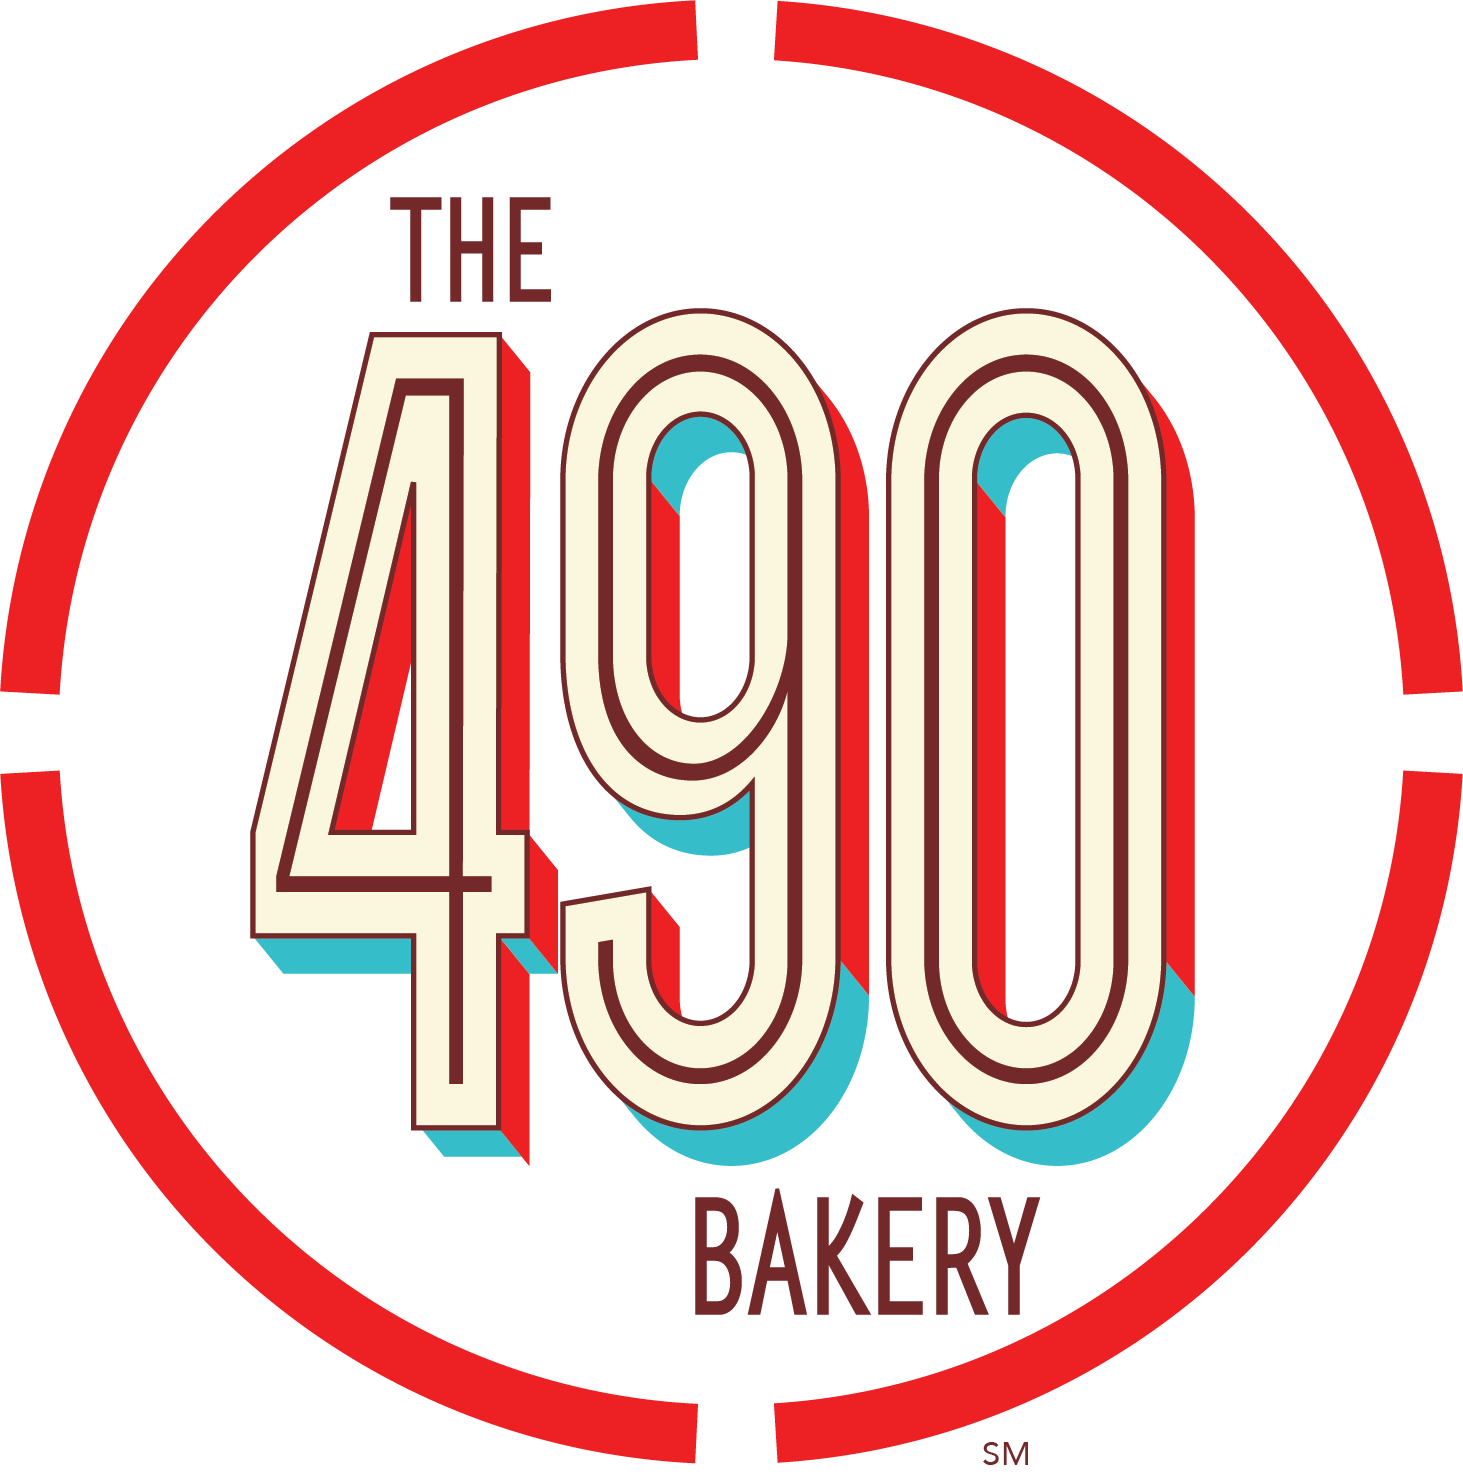 The 490 Bakery